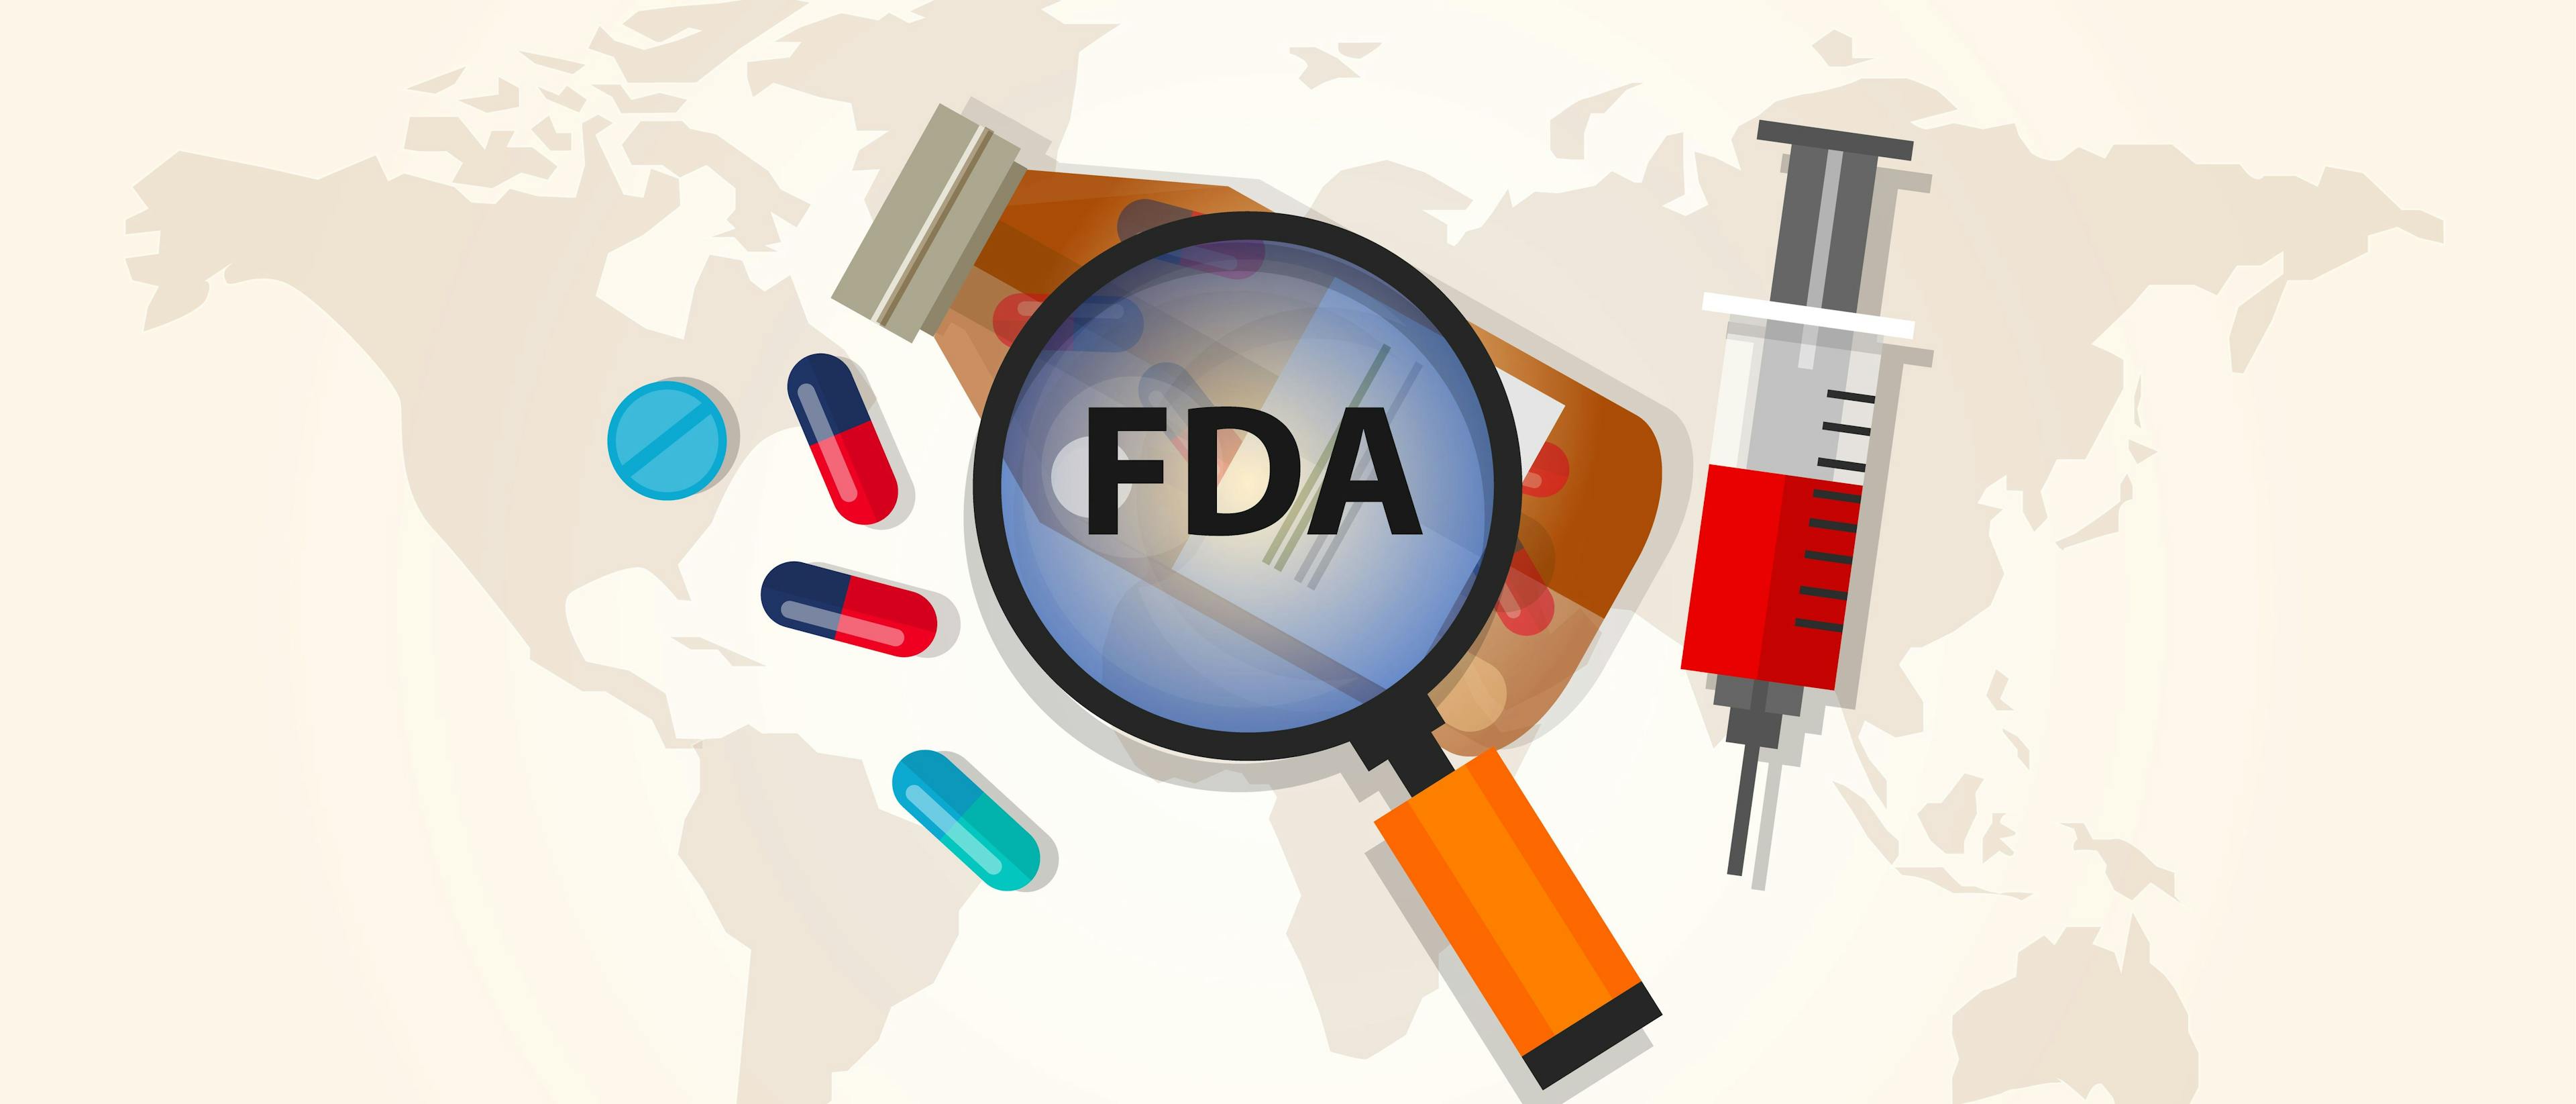 FDA Approval Illustration | Image Credit: bakhtiarzein - stock.adobe.com